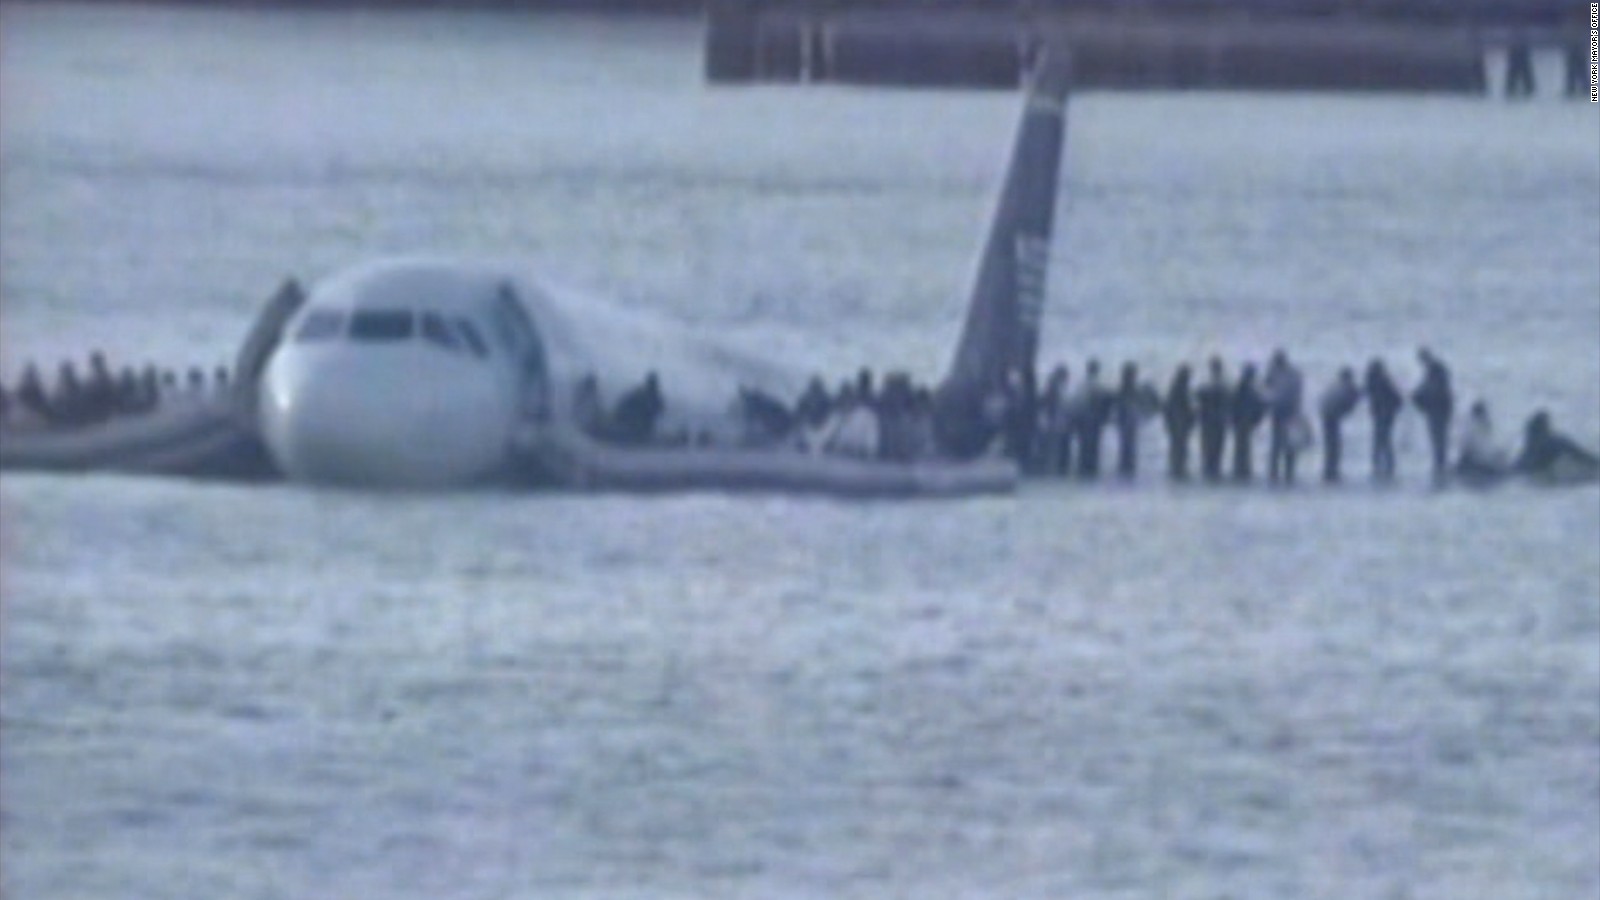 2009: Airplane crash-lands into Hudson River; all aboard reported safe - CNN